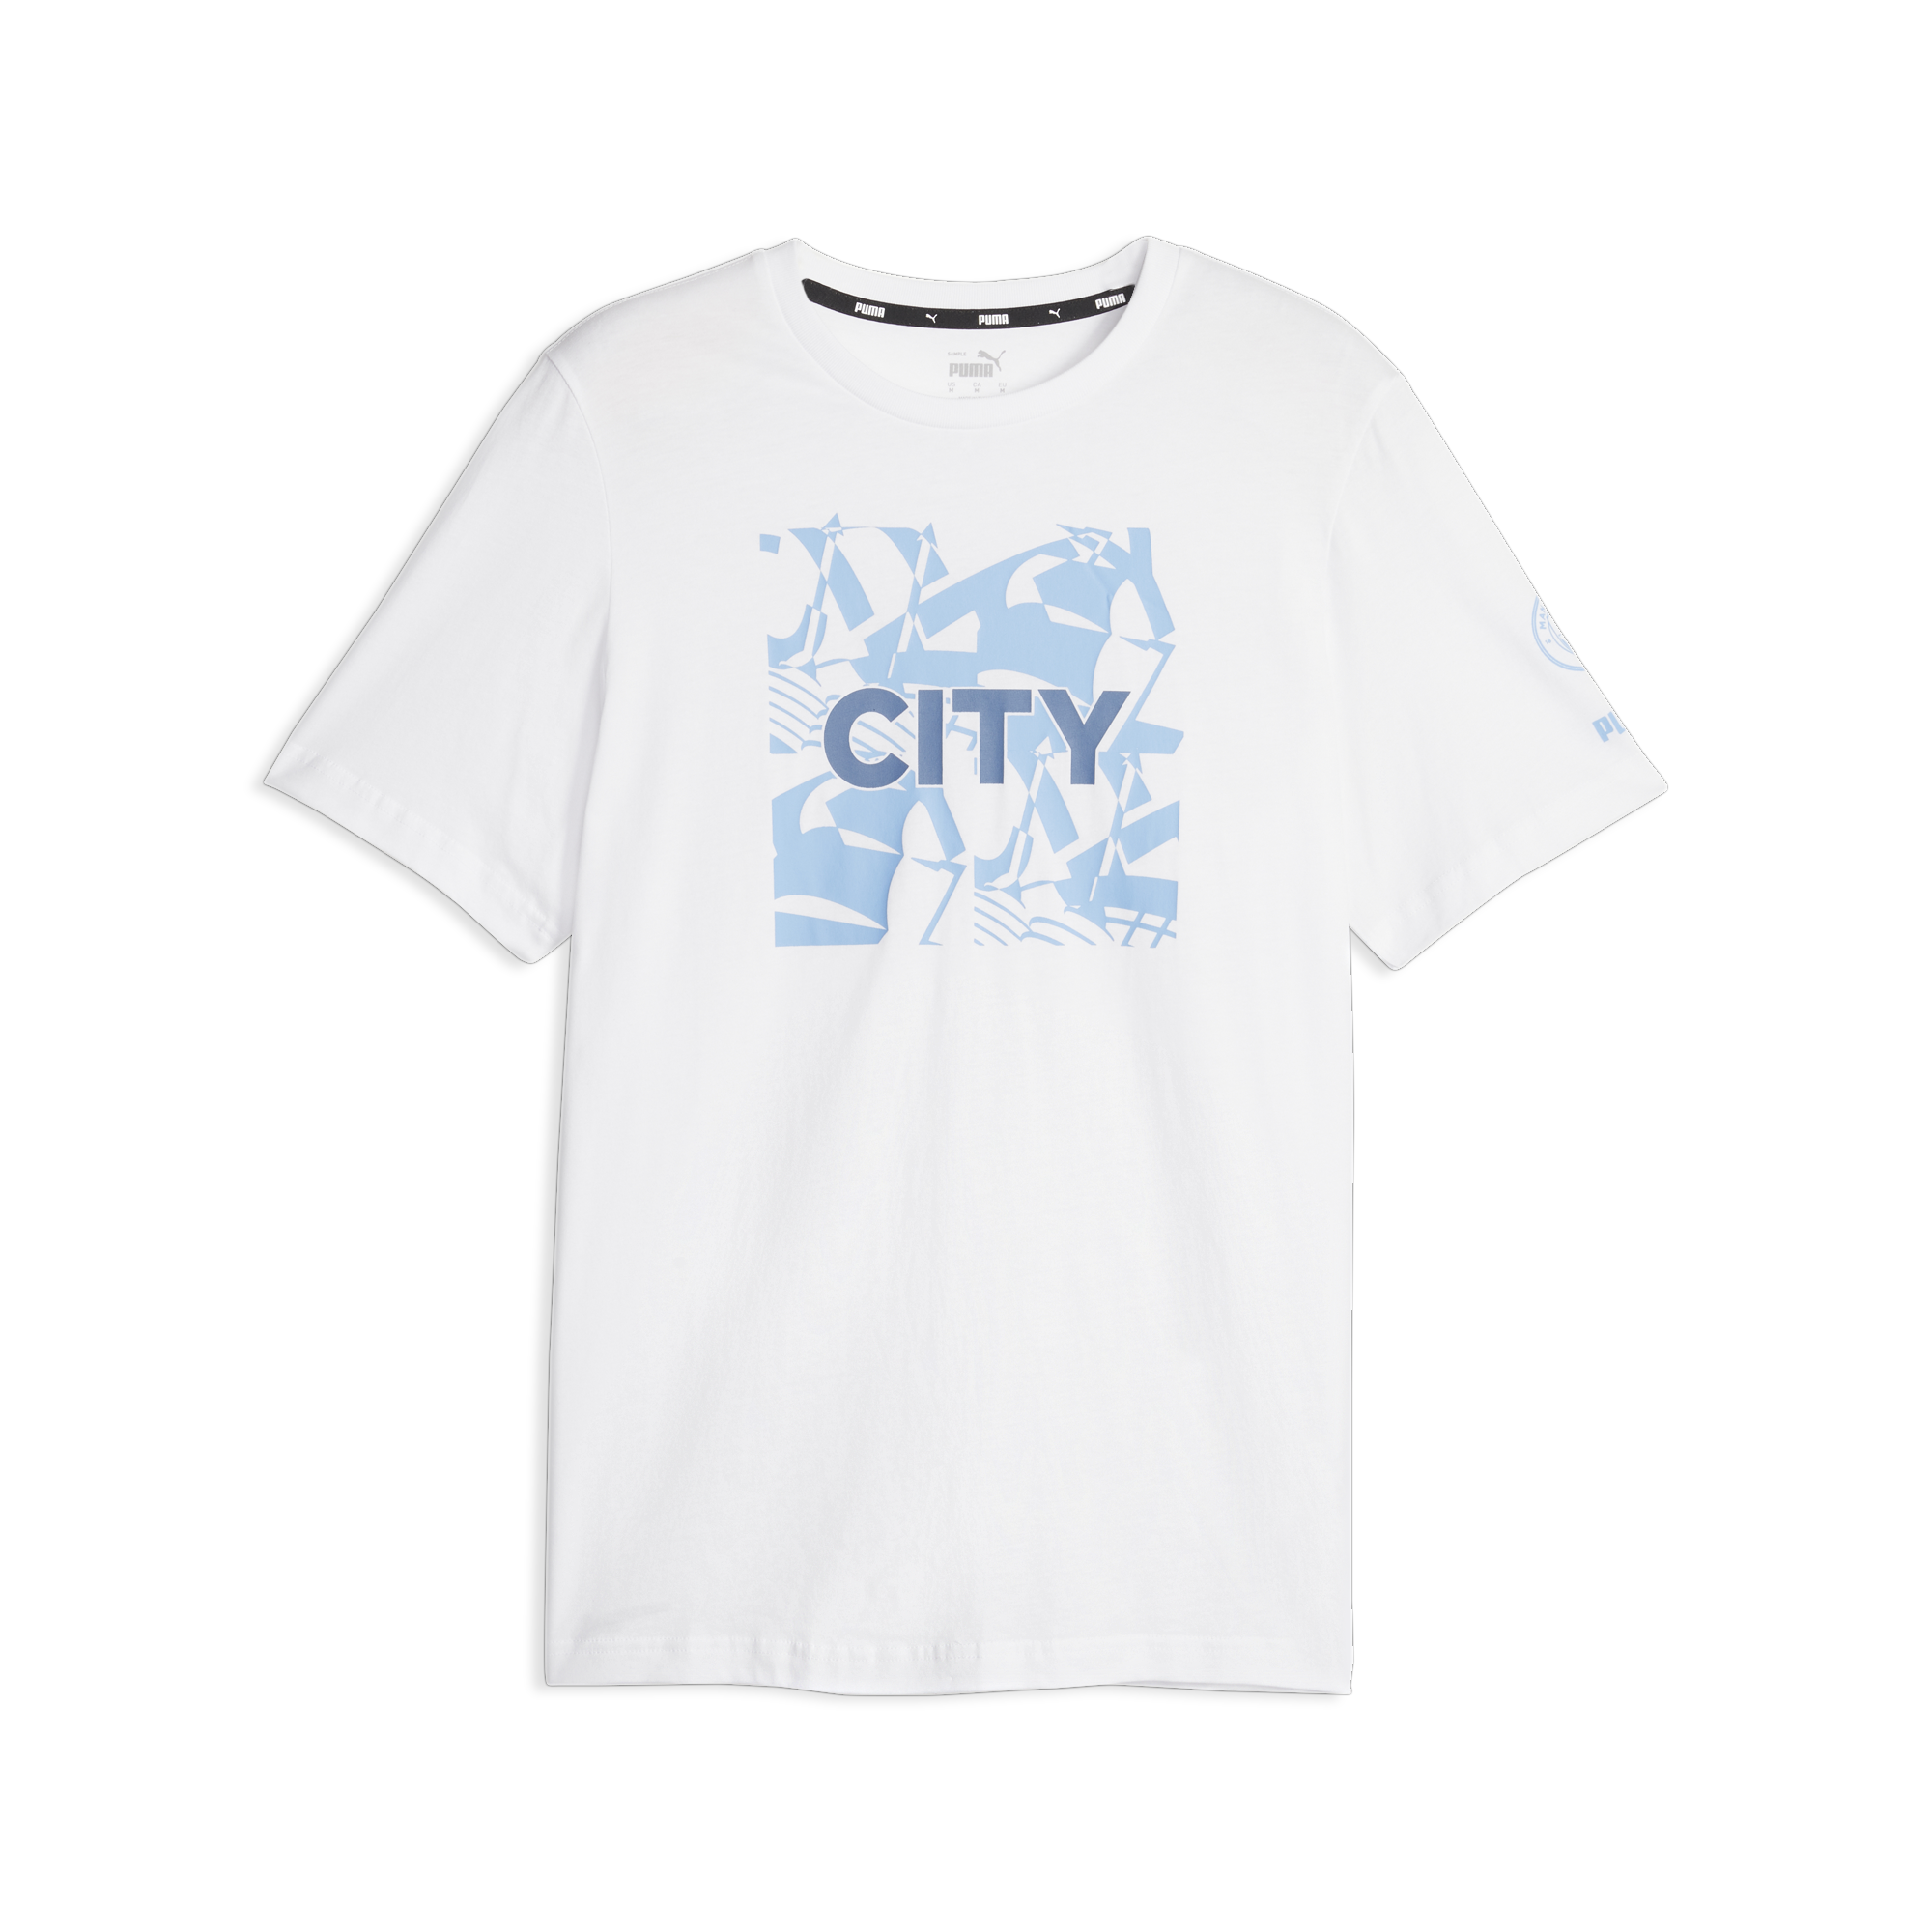 stefanssoccer.com:Puma Man City FTBLCore Graphic Tee - White